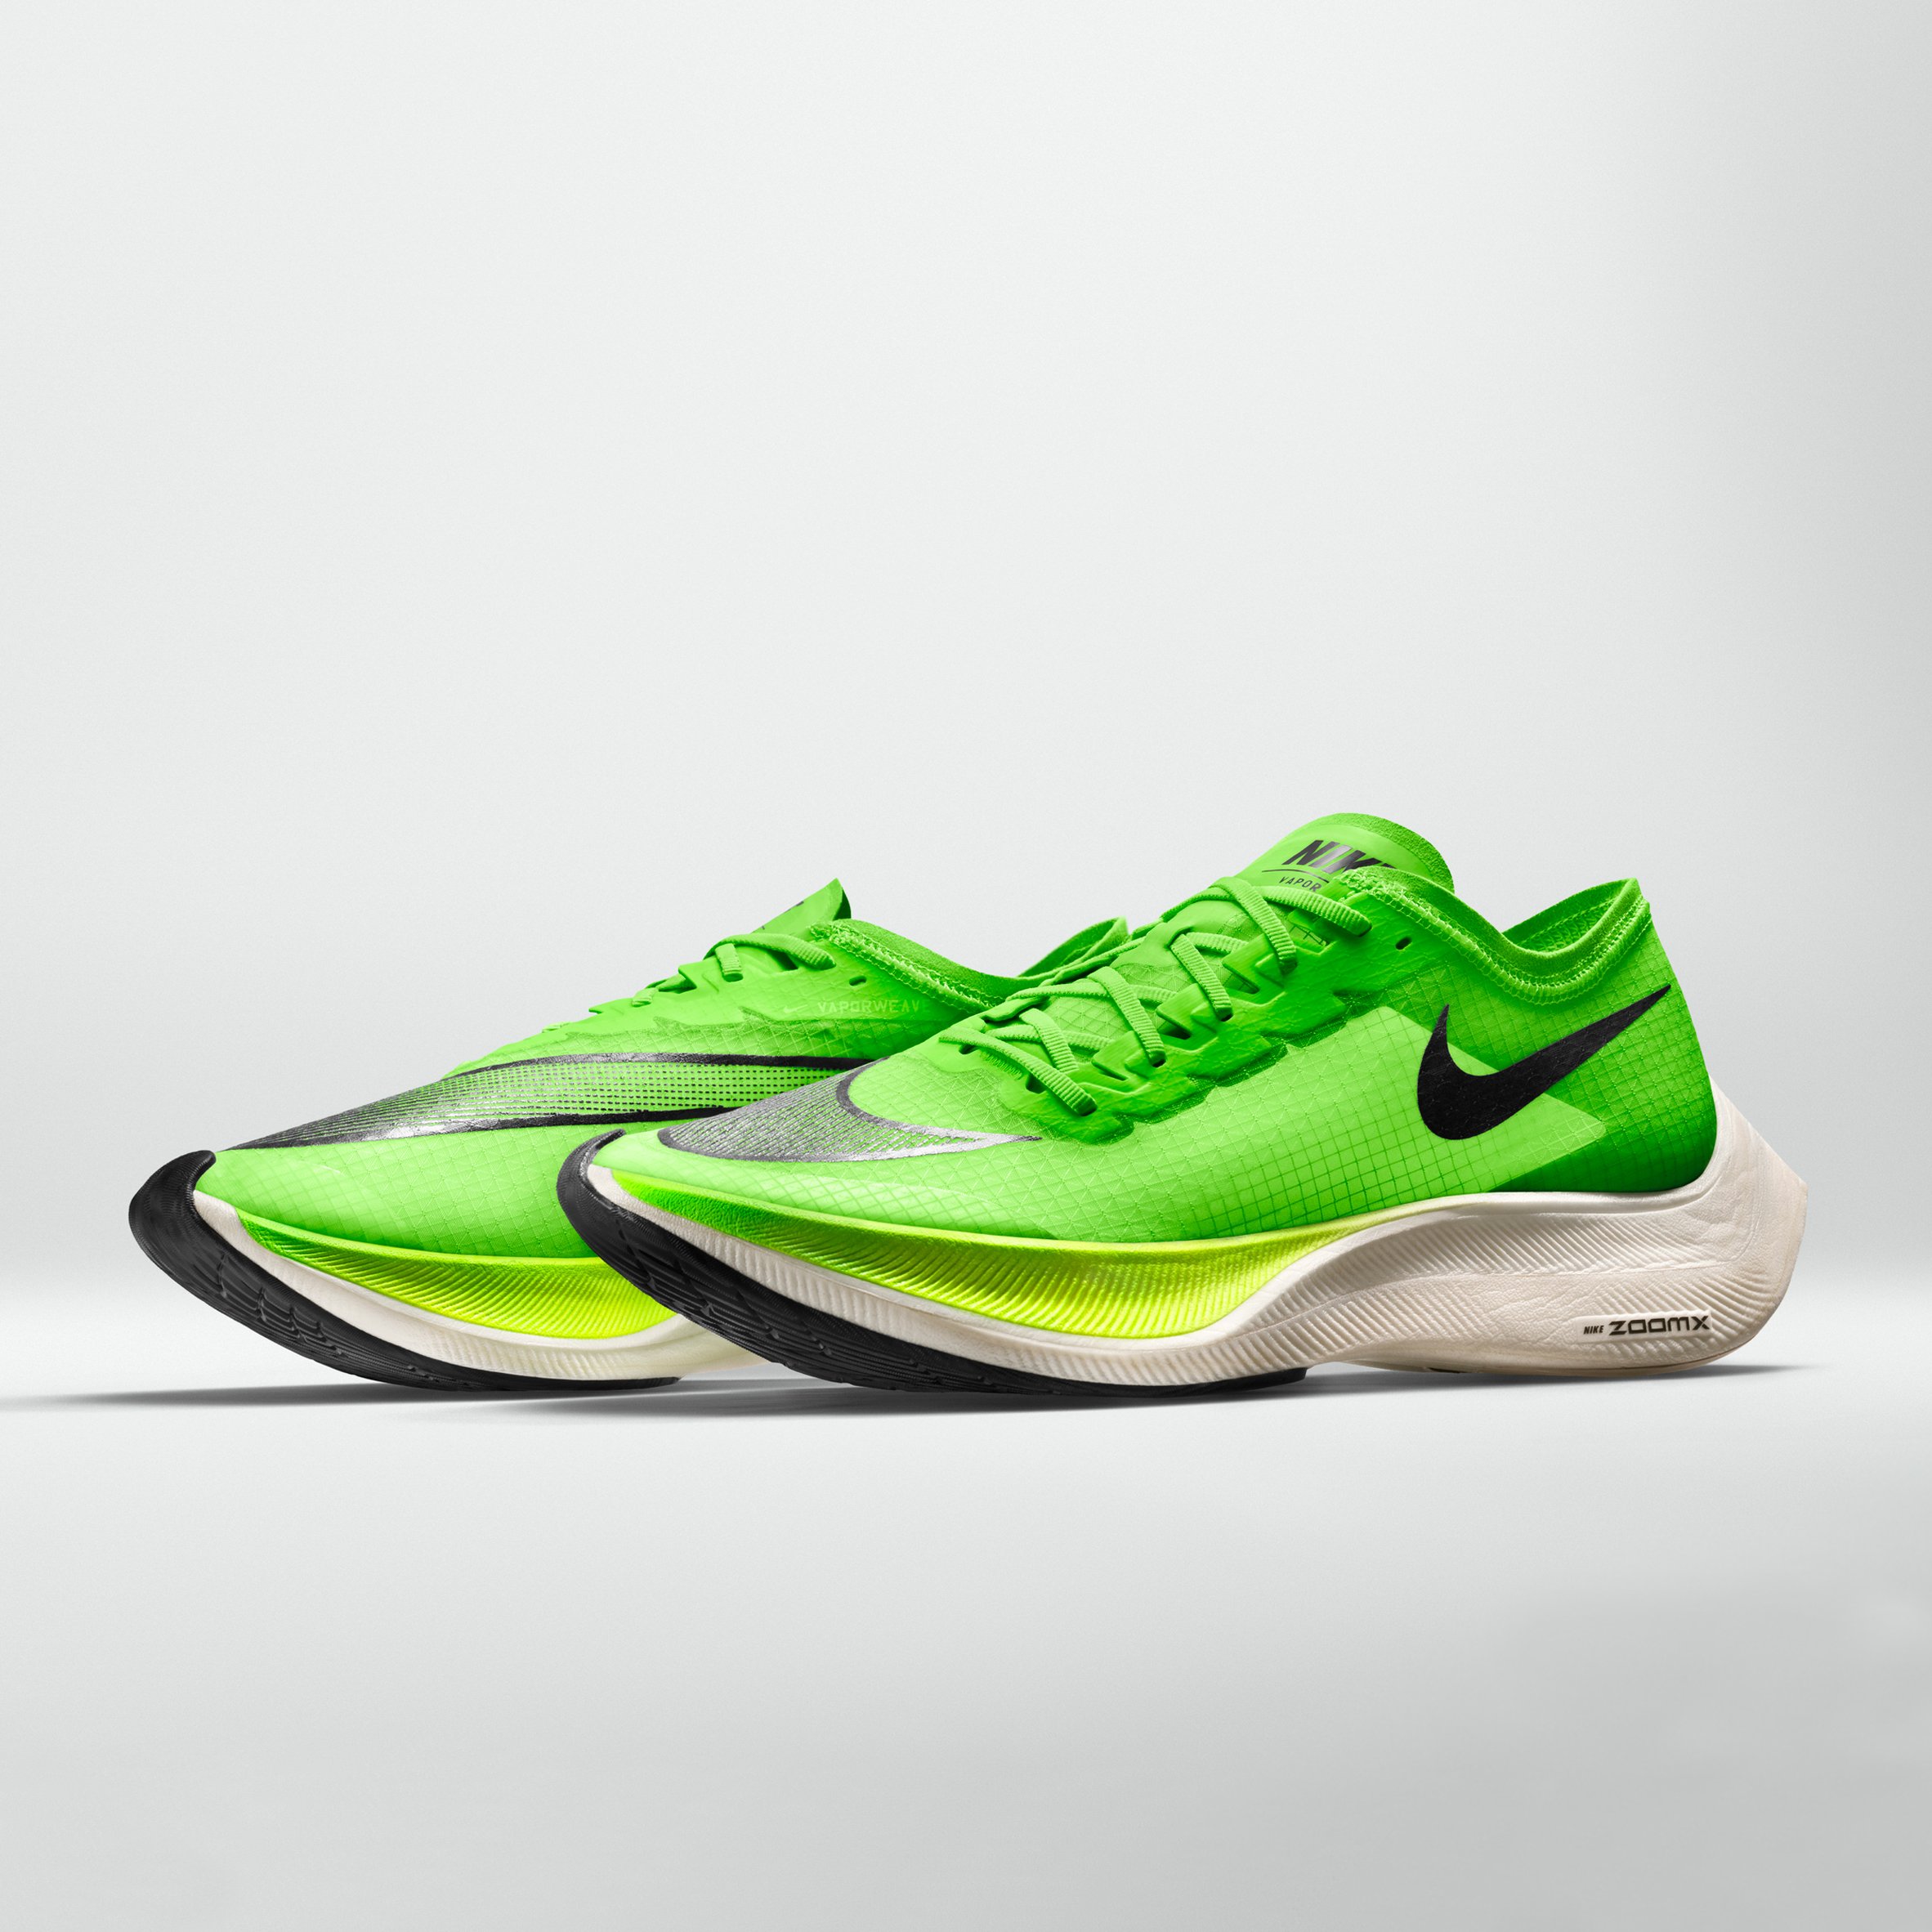 Nike avoids Vaporfly running-shoe ban ahead of Tokyo 2020 Olympics